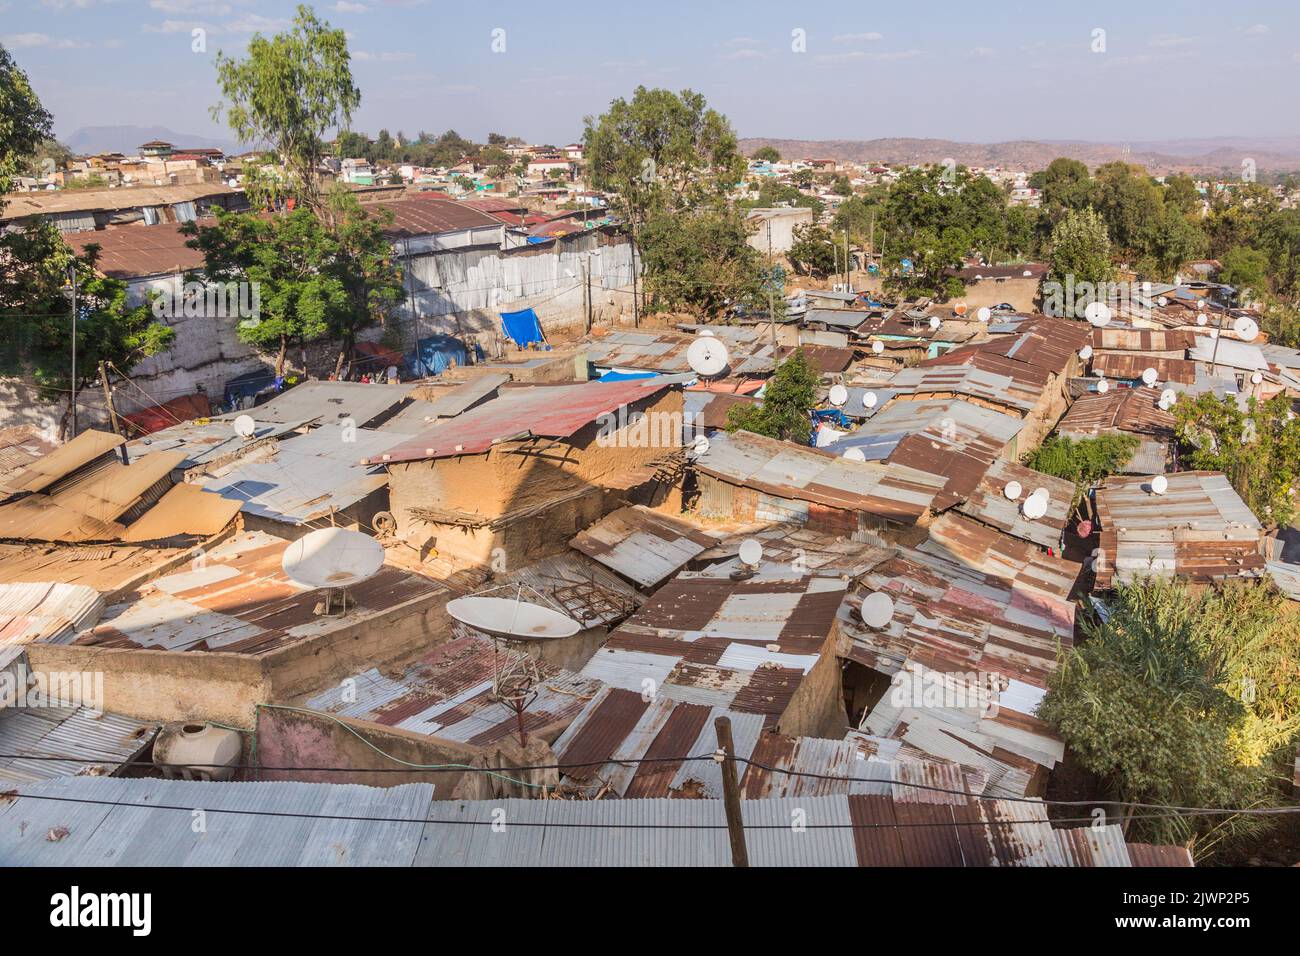 Aerial view of a poor neighborhood in Harar, Ethiopia Stock Photo